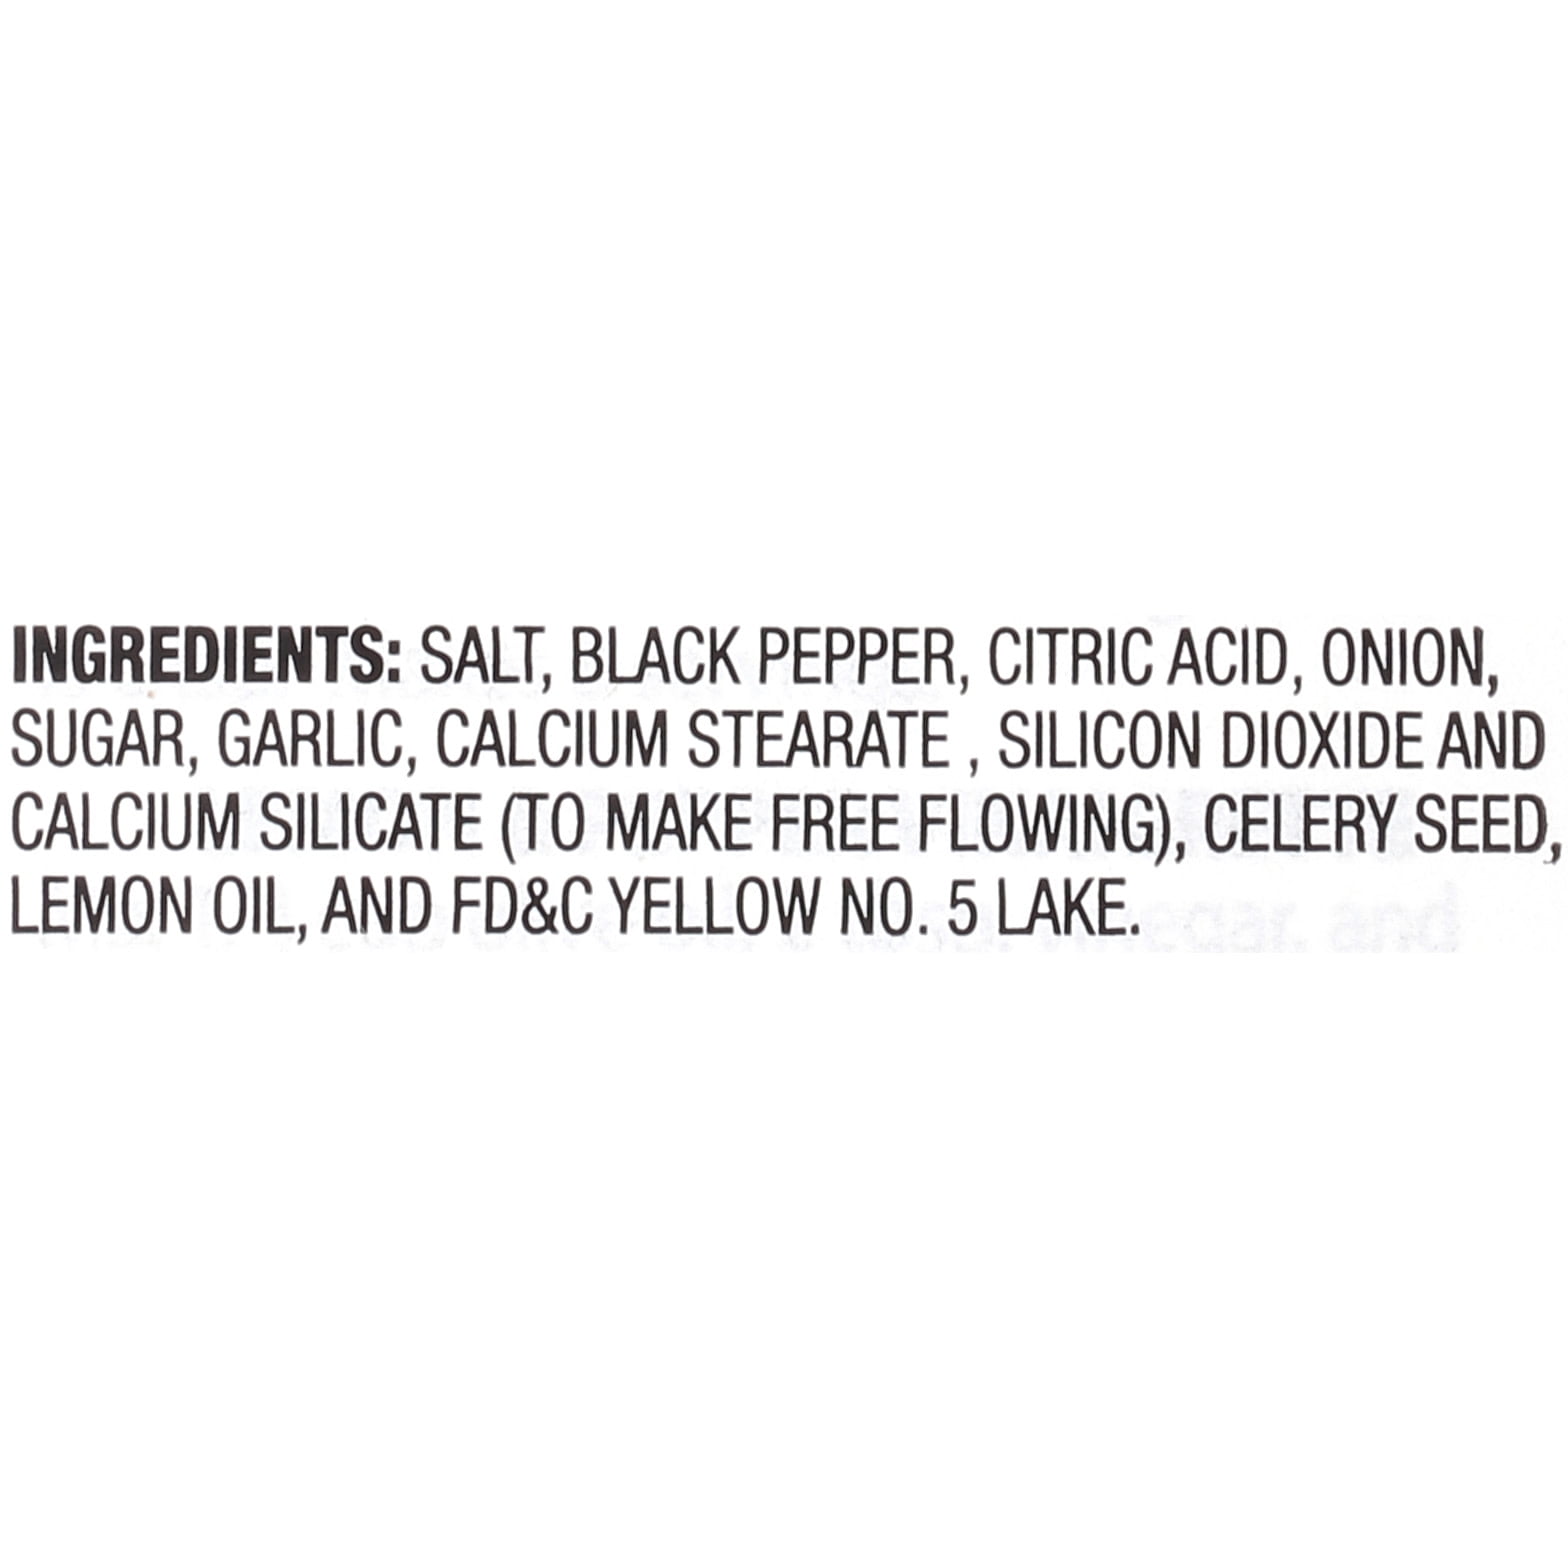 McCormick's New Seasoning Blends in Lemon Pepper Seasoning, Garlic Salt,  Cinnamon Sugar, Cajun Seasoning, and Chili Lime Seasoning are…